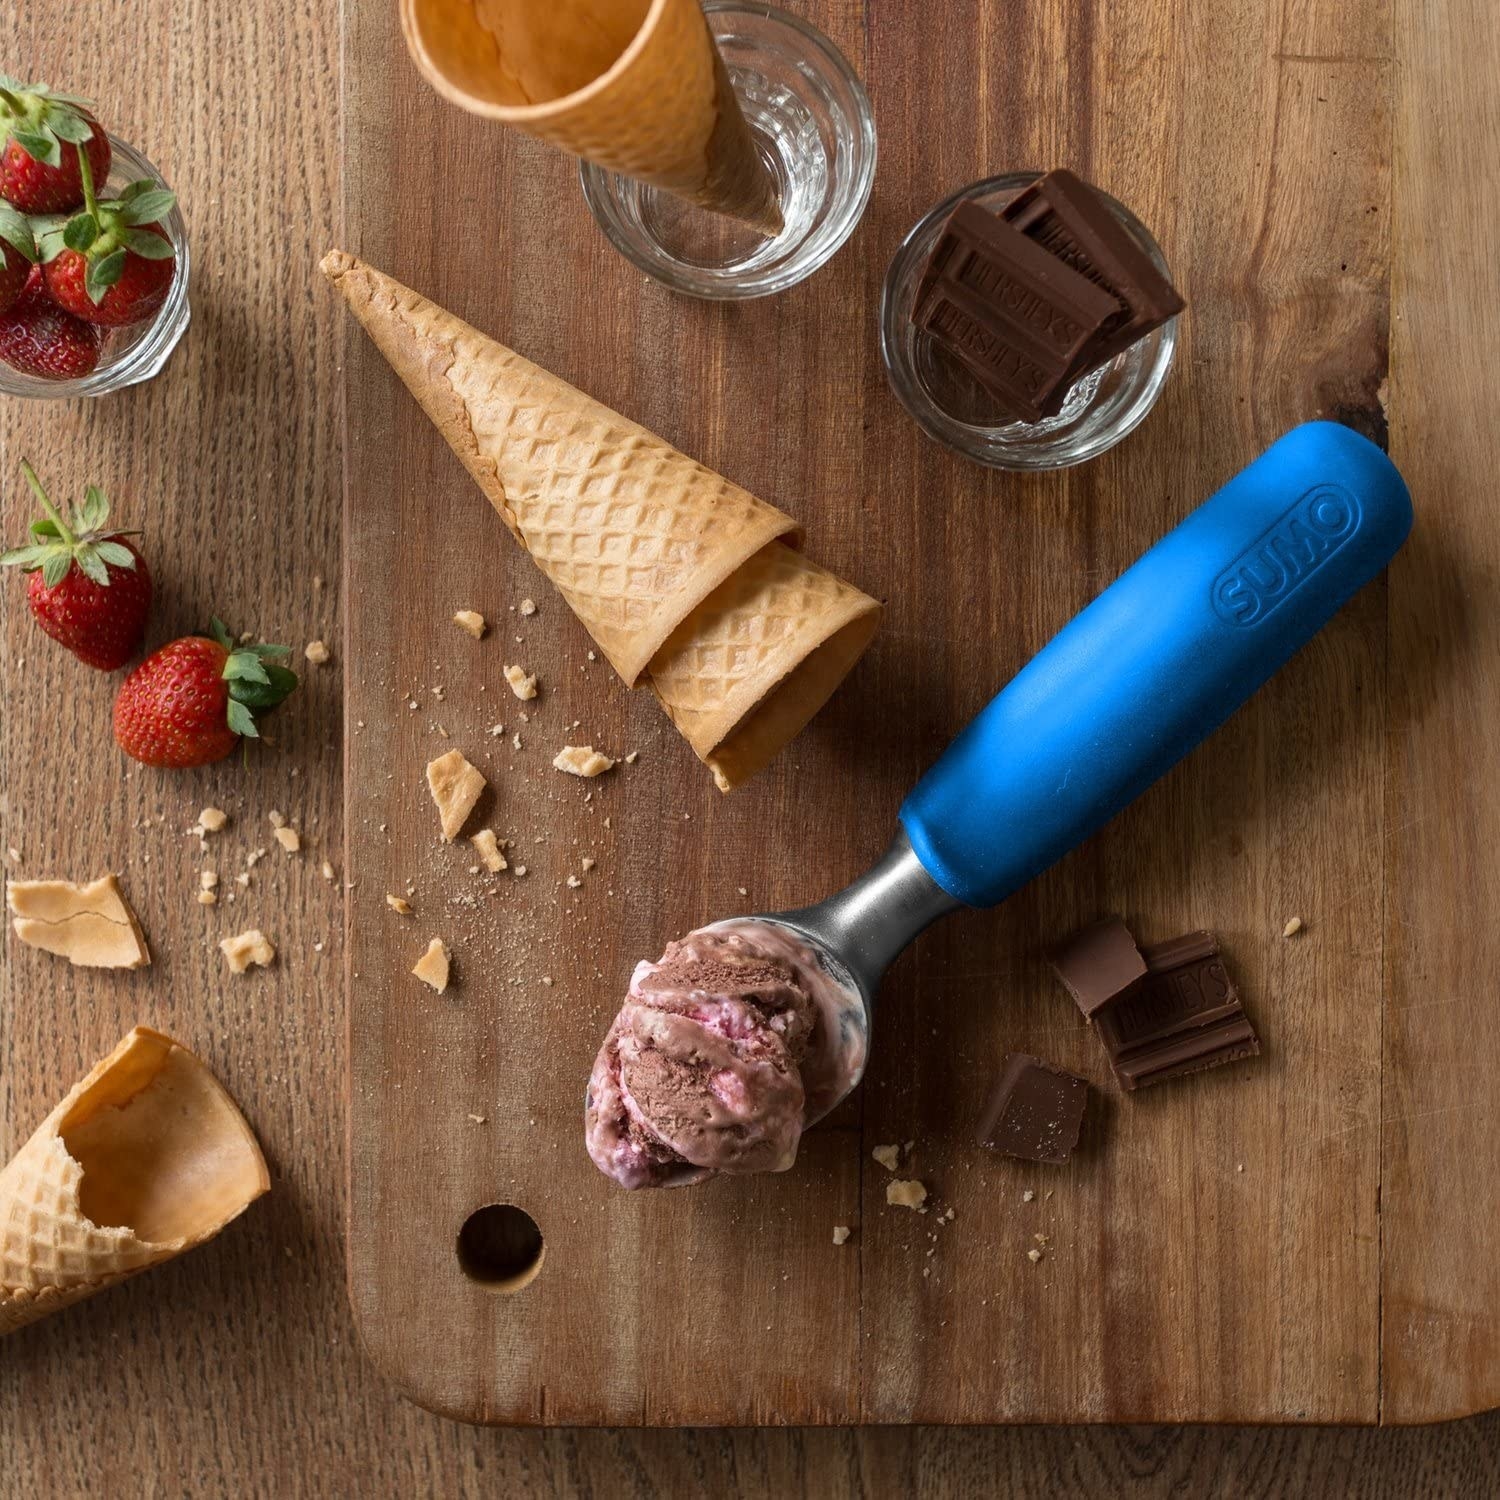 blue handled ice cream scoop